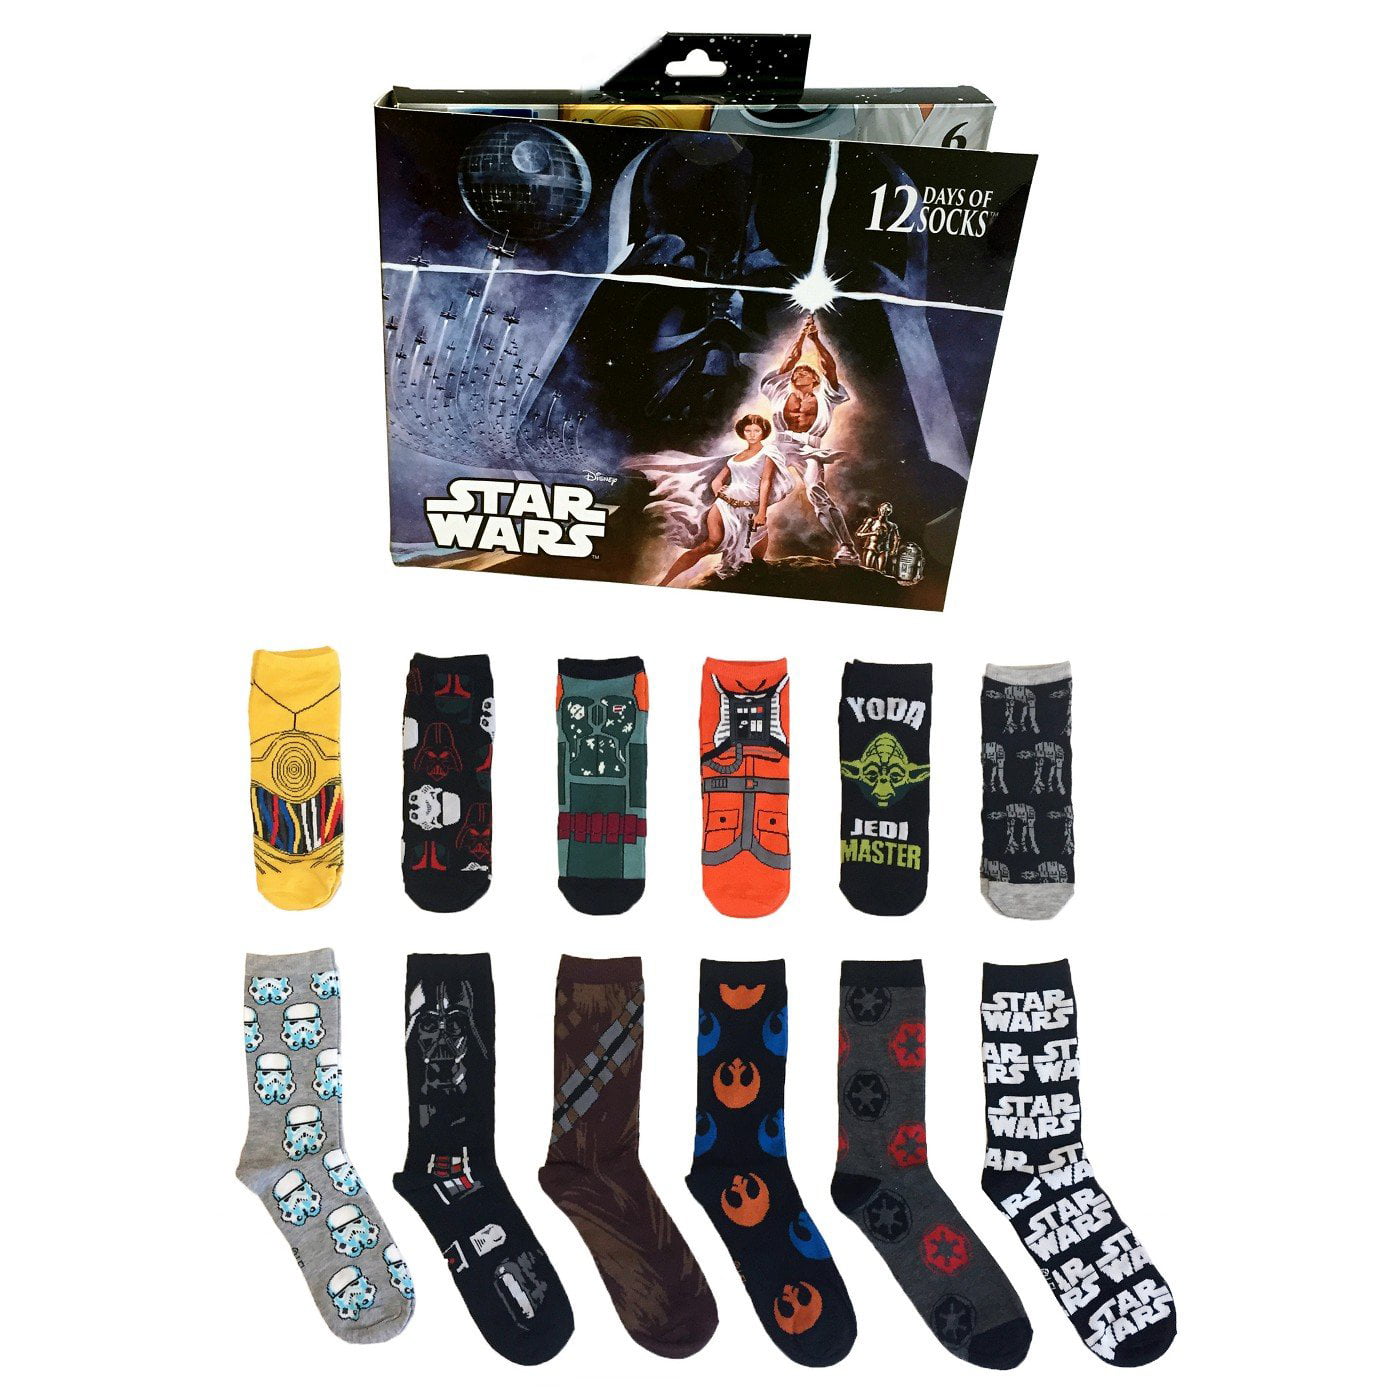 New Disney Star Wars Boys' 12 Days of Socks Collection 